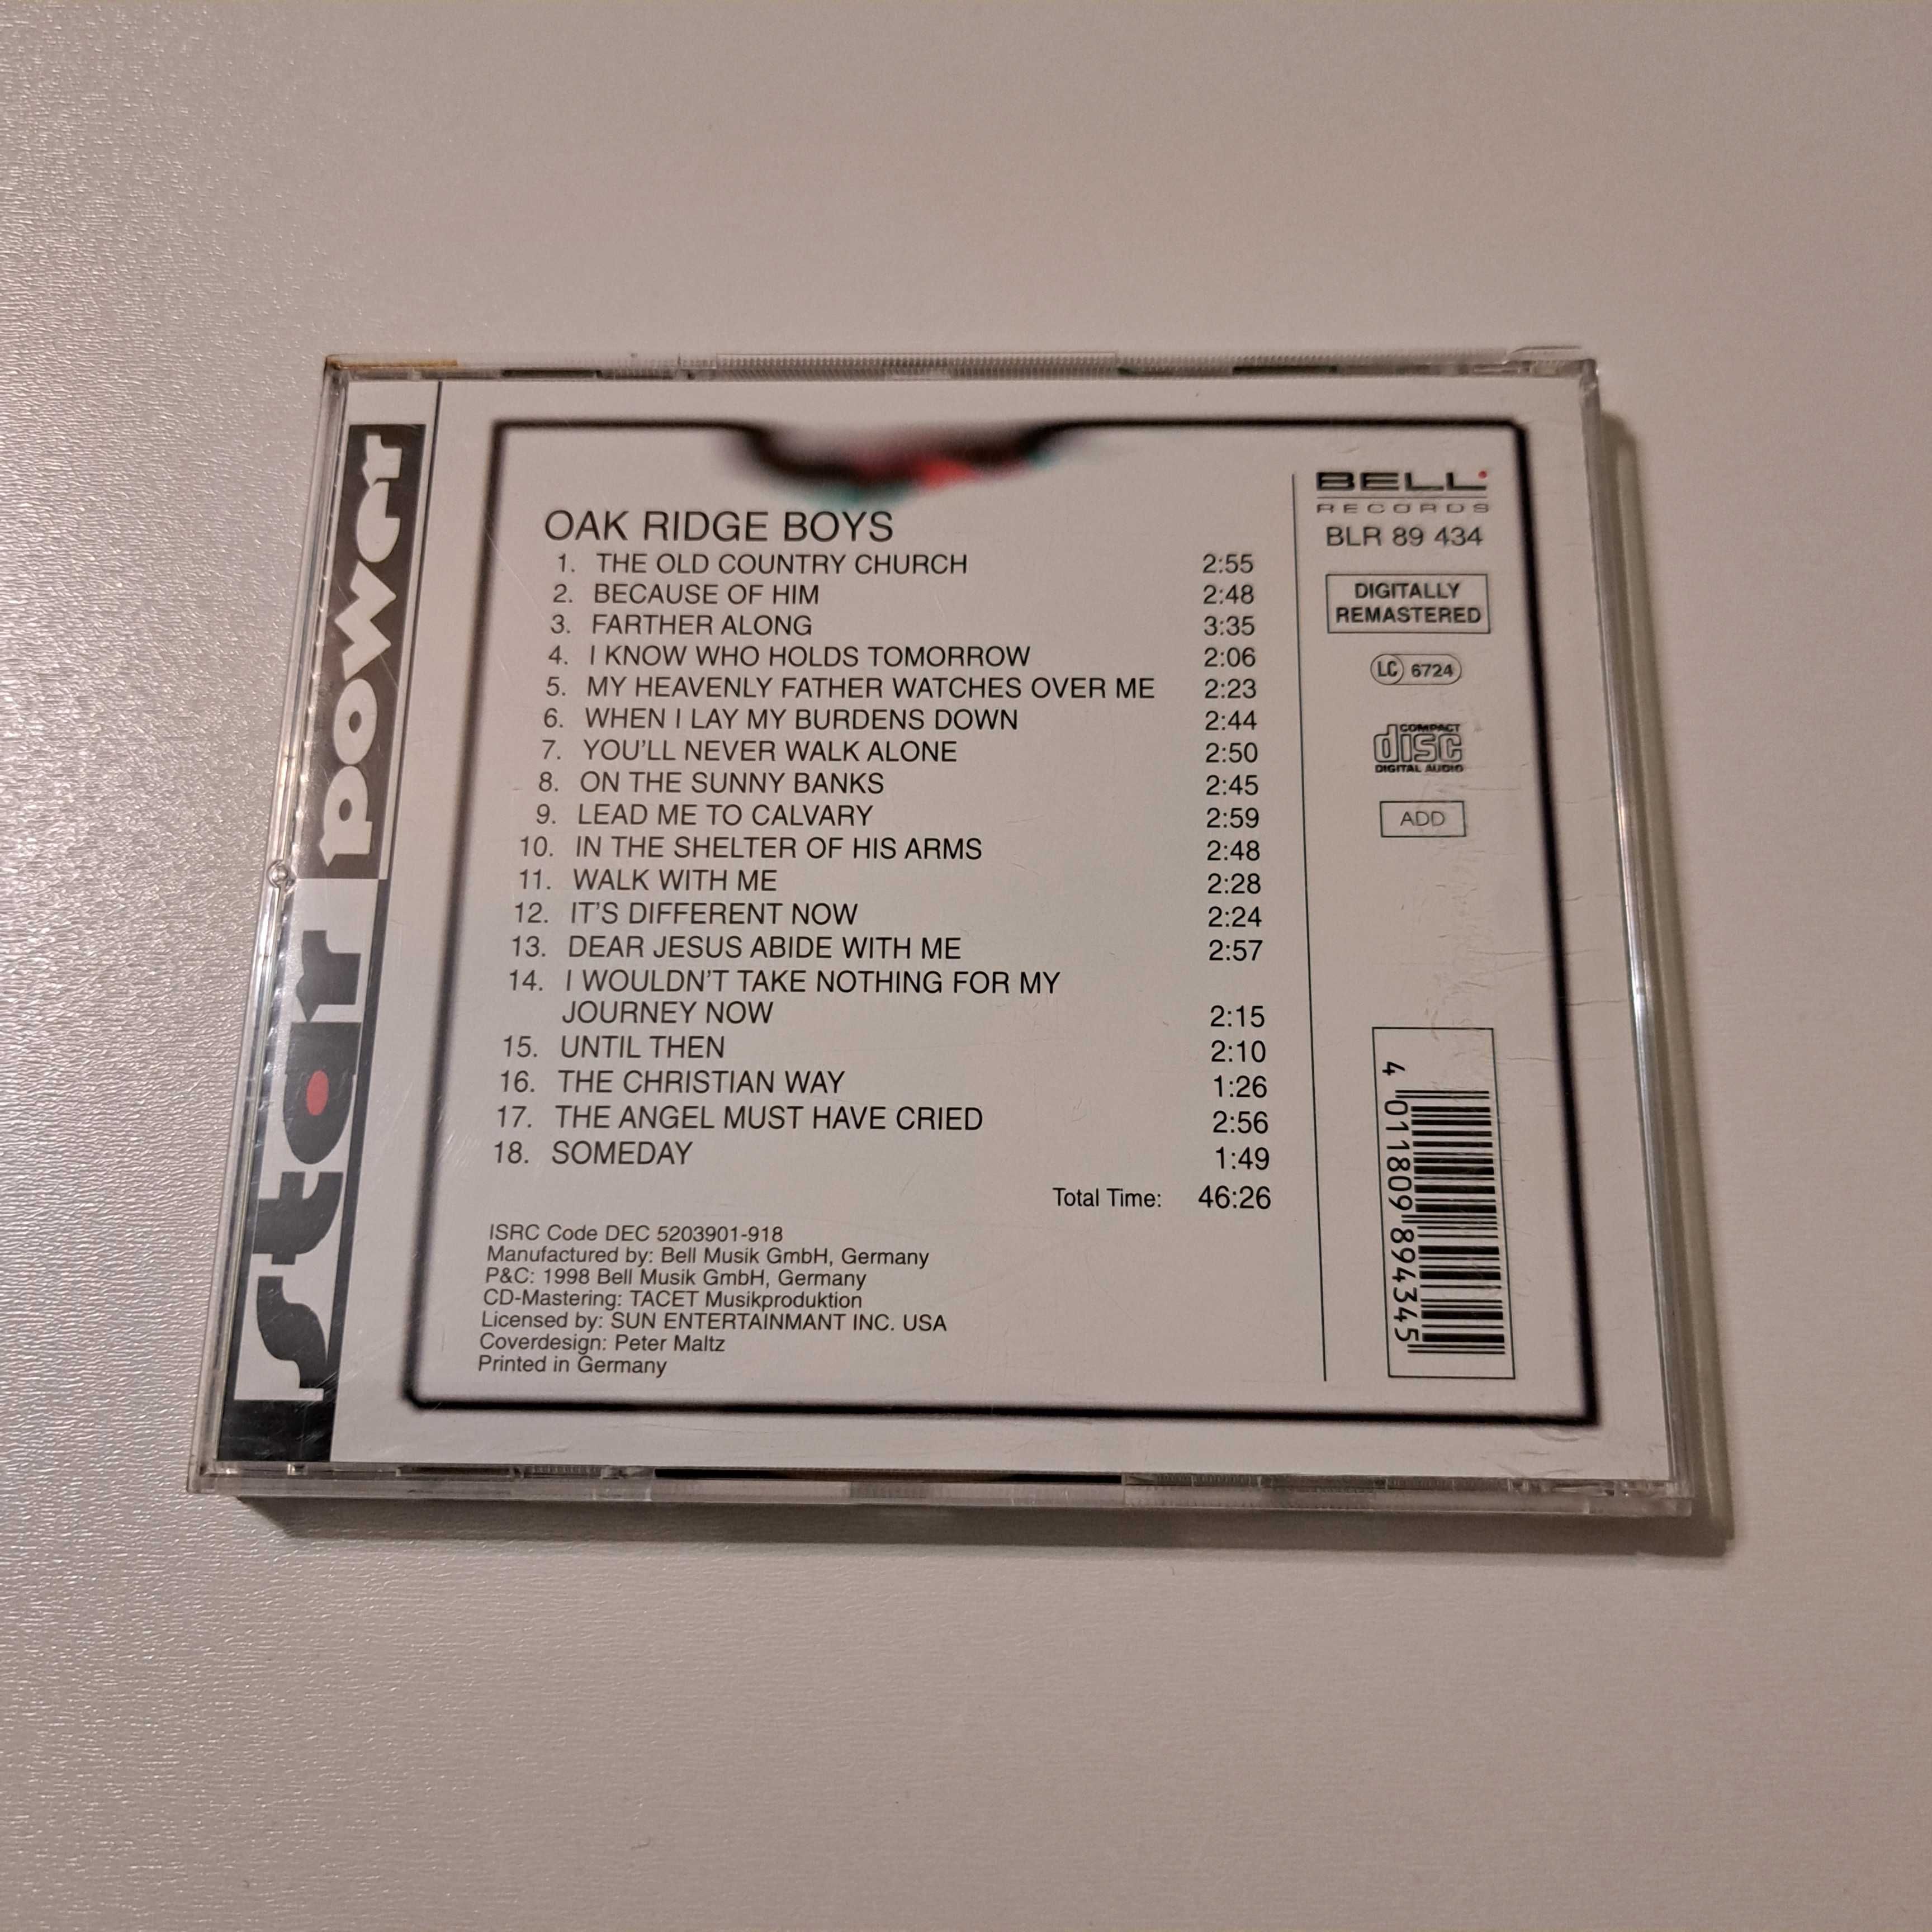 Płyta CD  The Oak Ridge Boys - Digitally Remastered  nr734